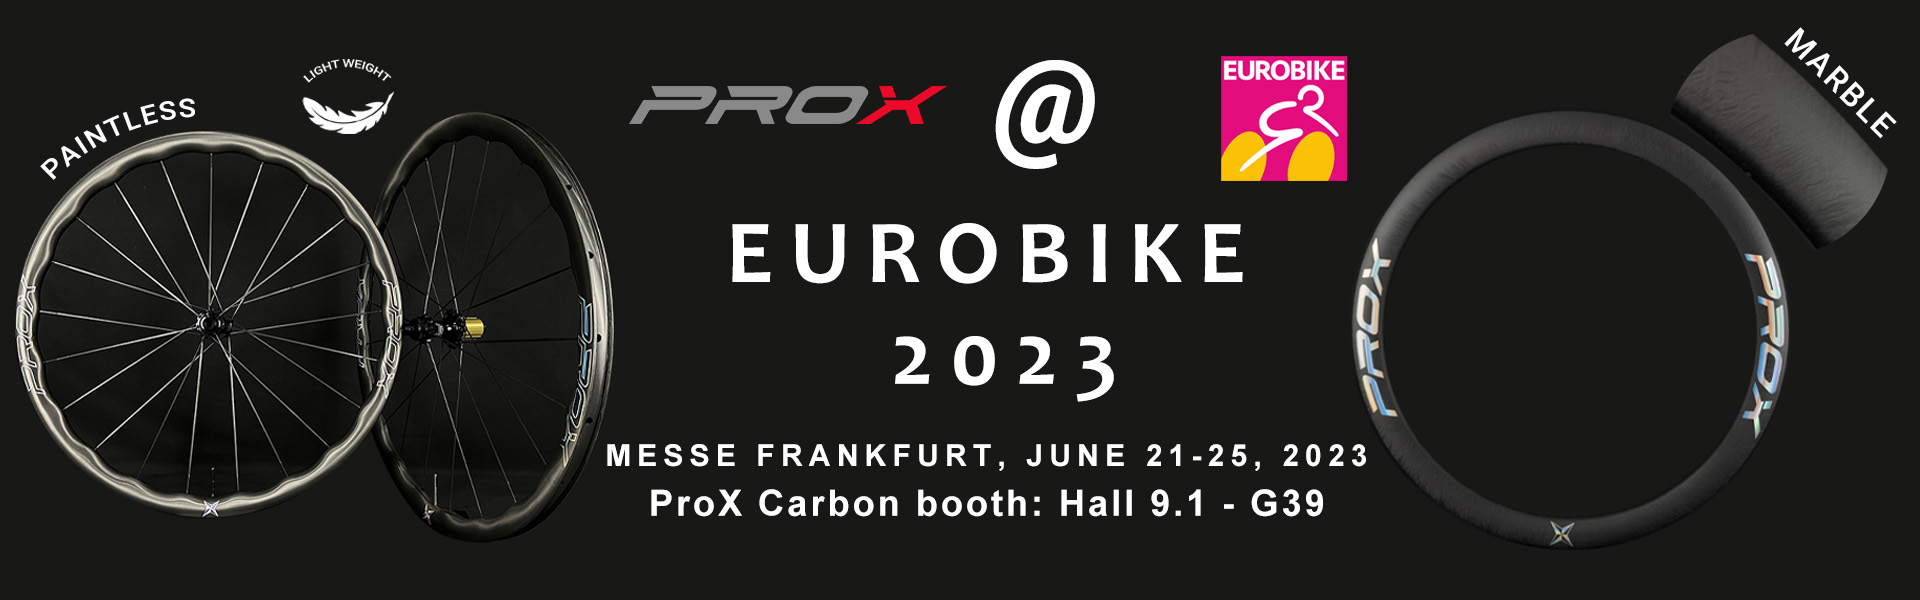 ProX Carbon Eurobike show 2023